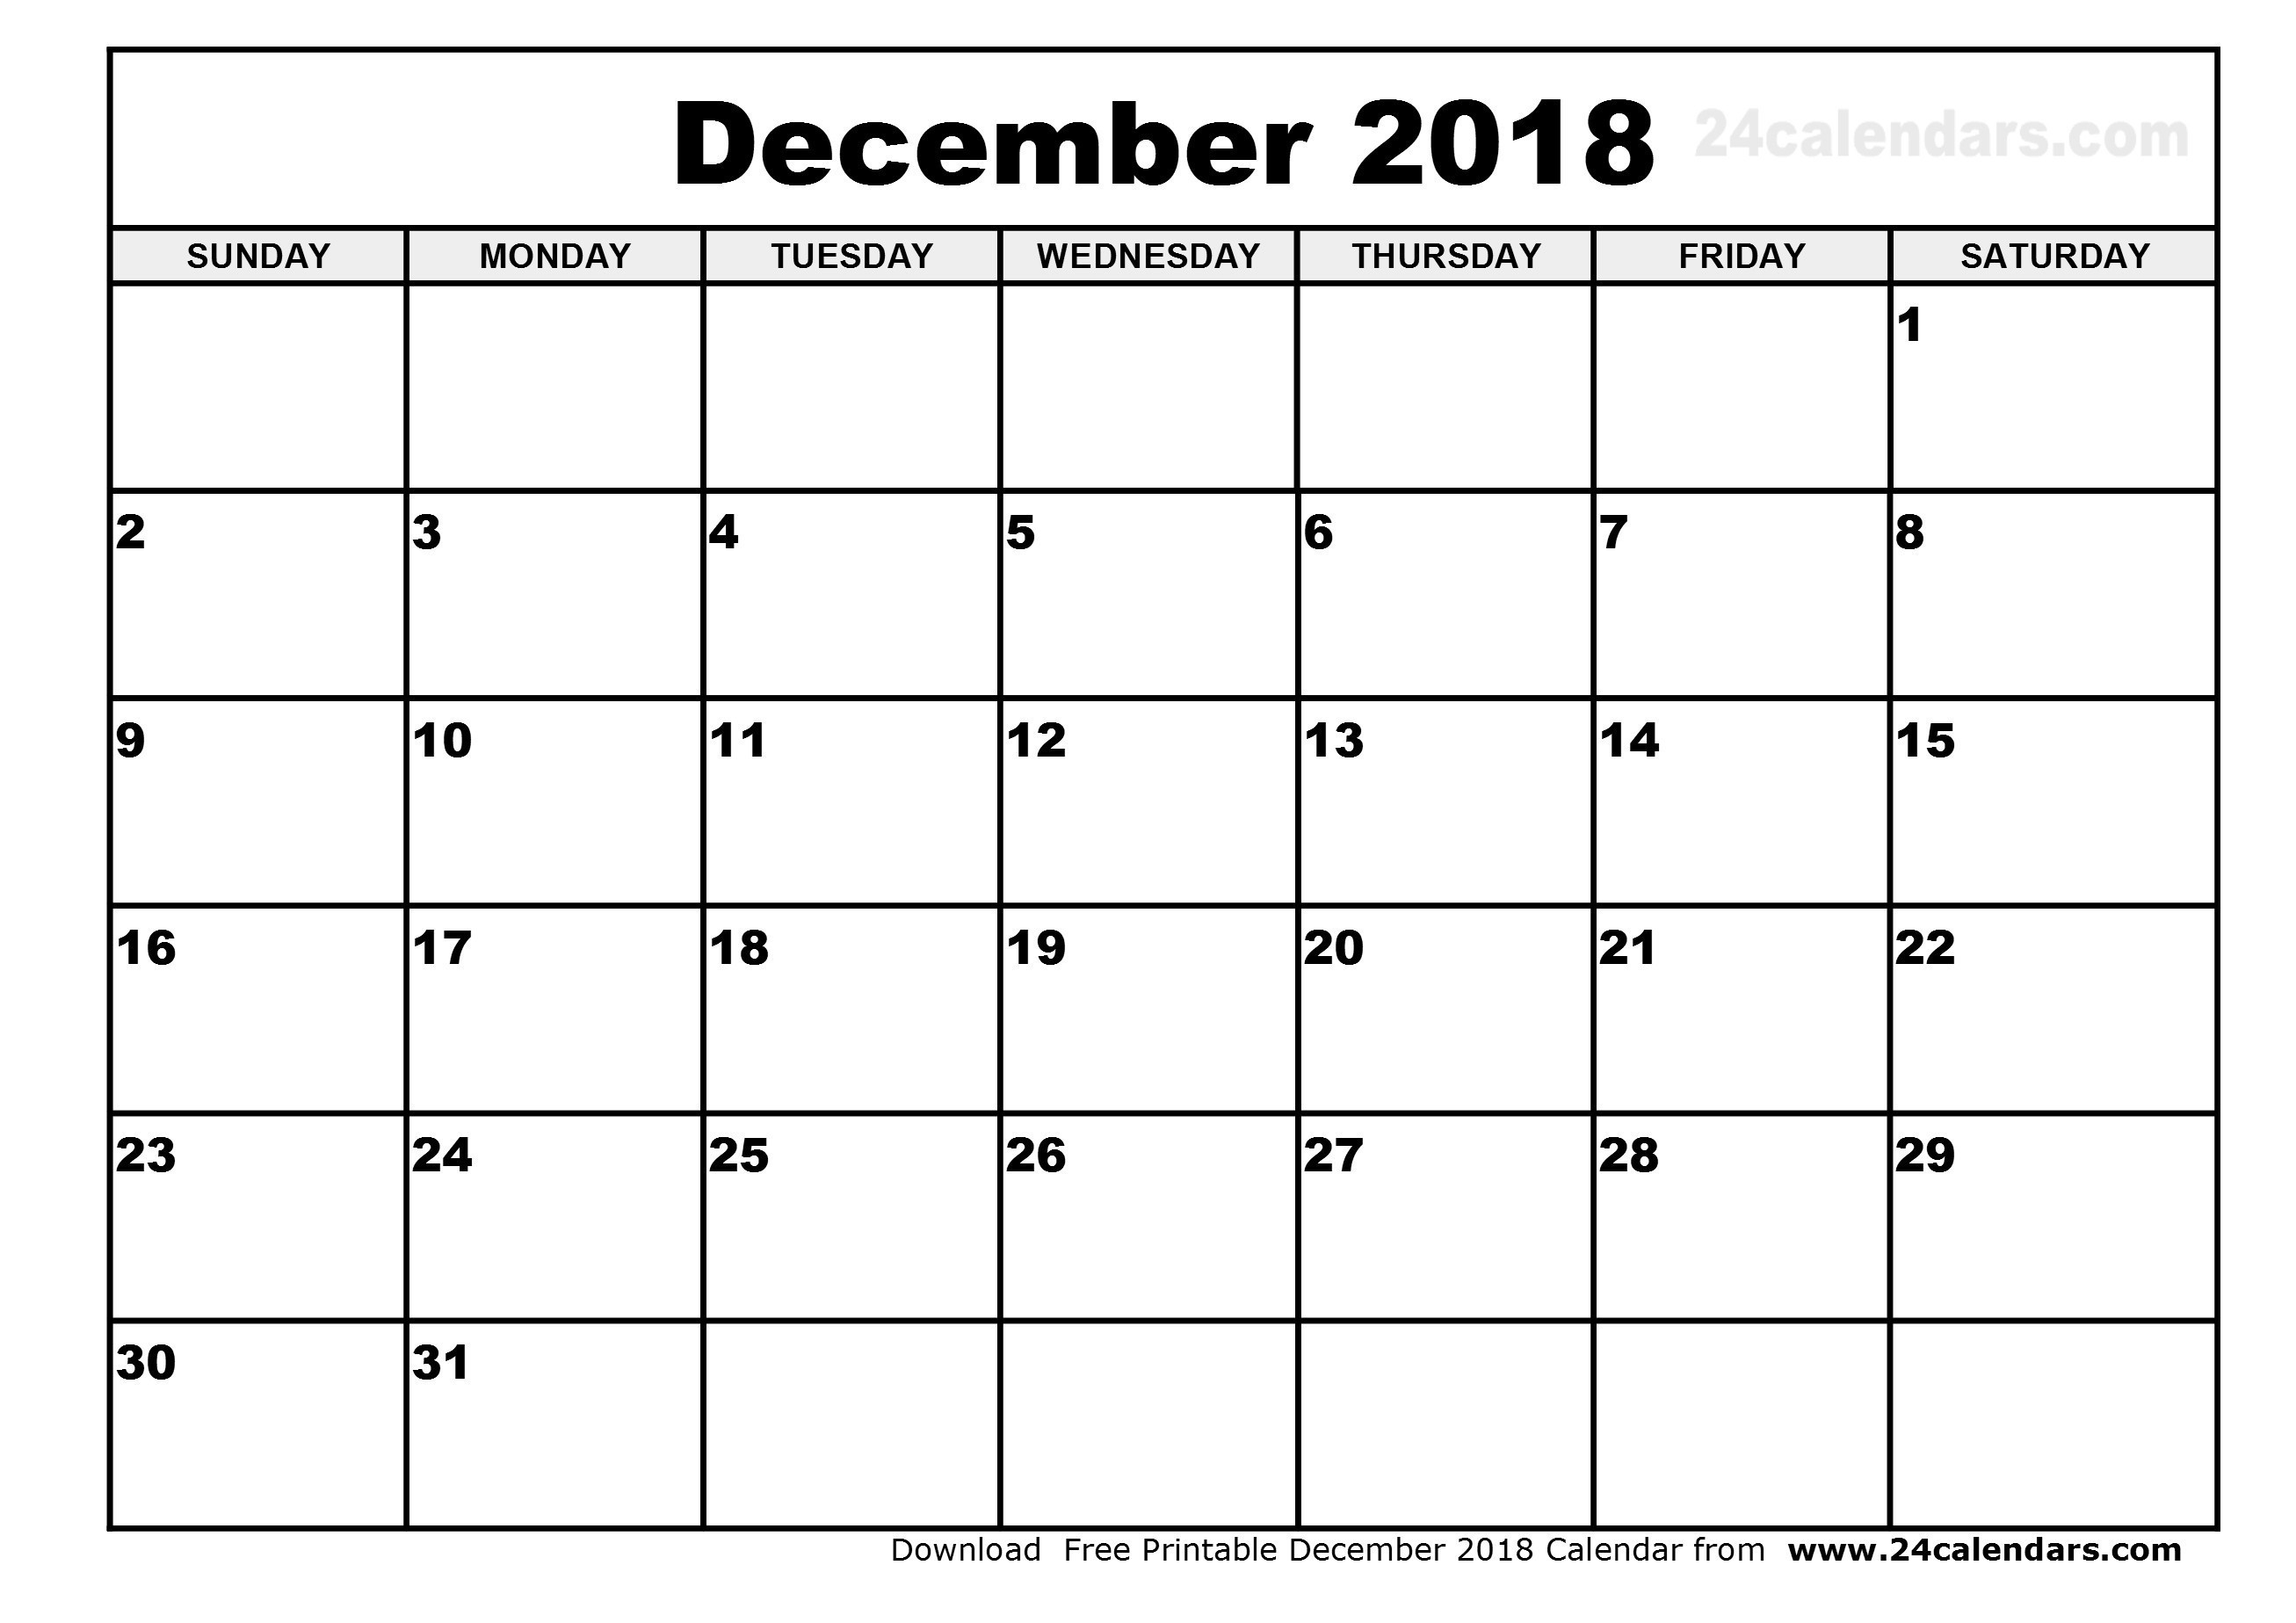 Make A Countdown Calendar Printable - Free Calendar Collection Create A Countdown Calendar To Print